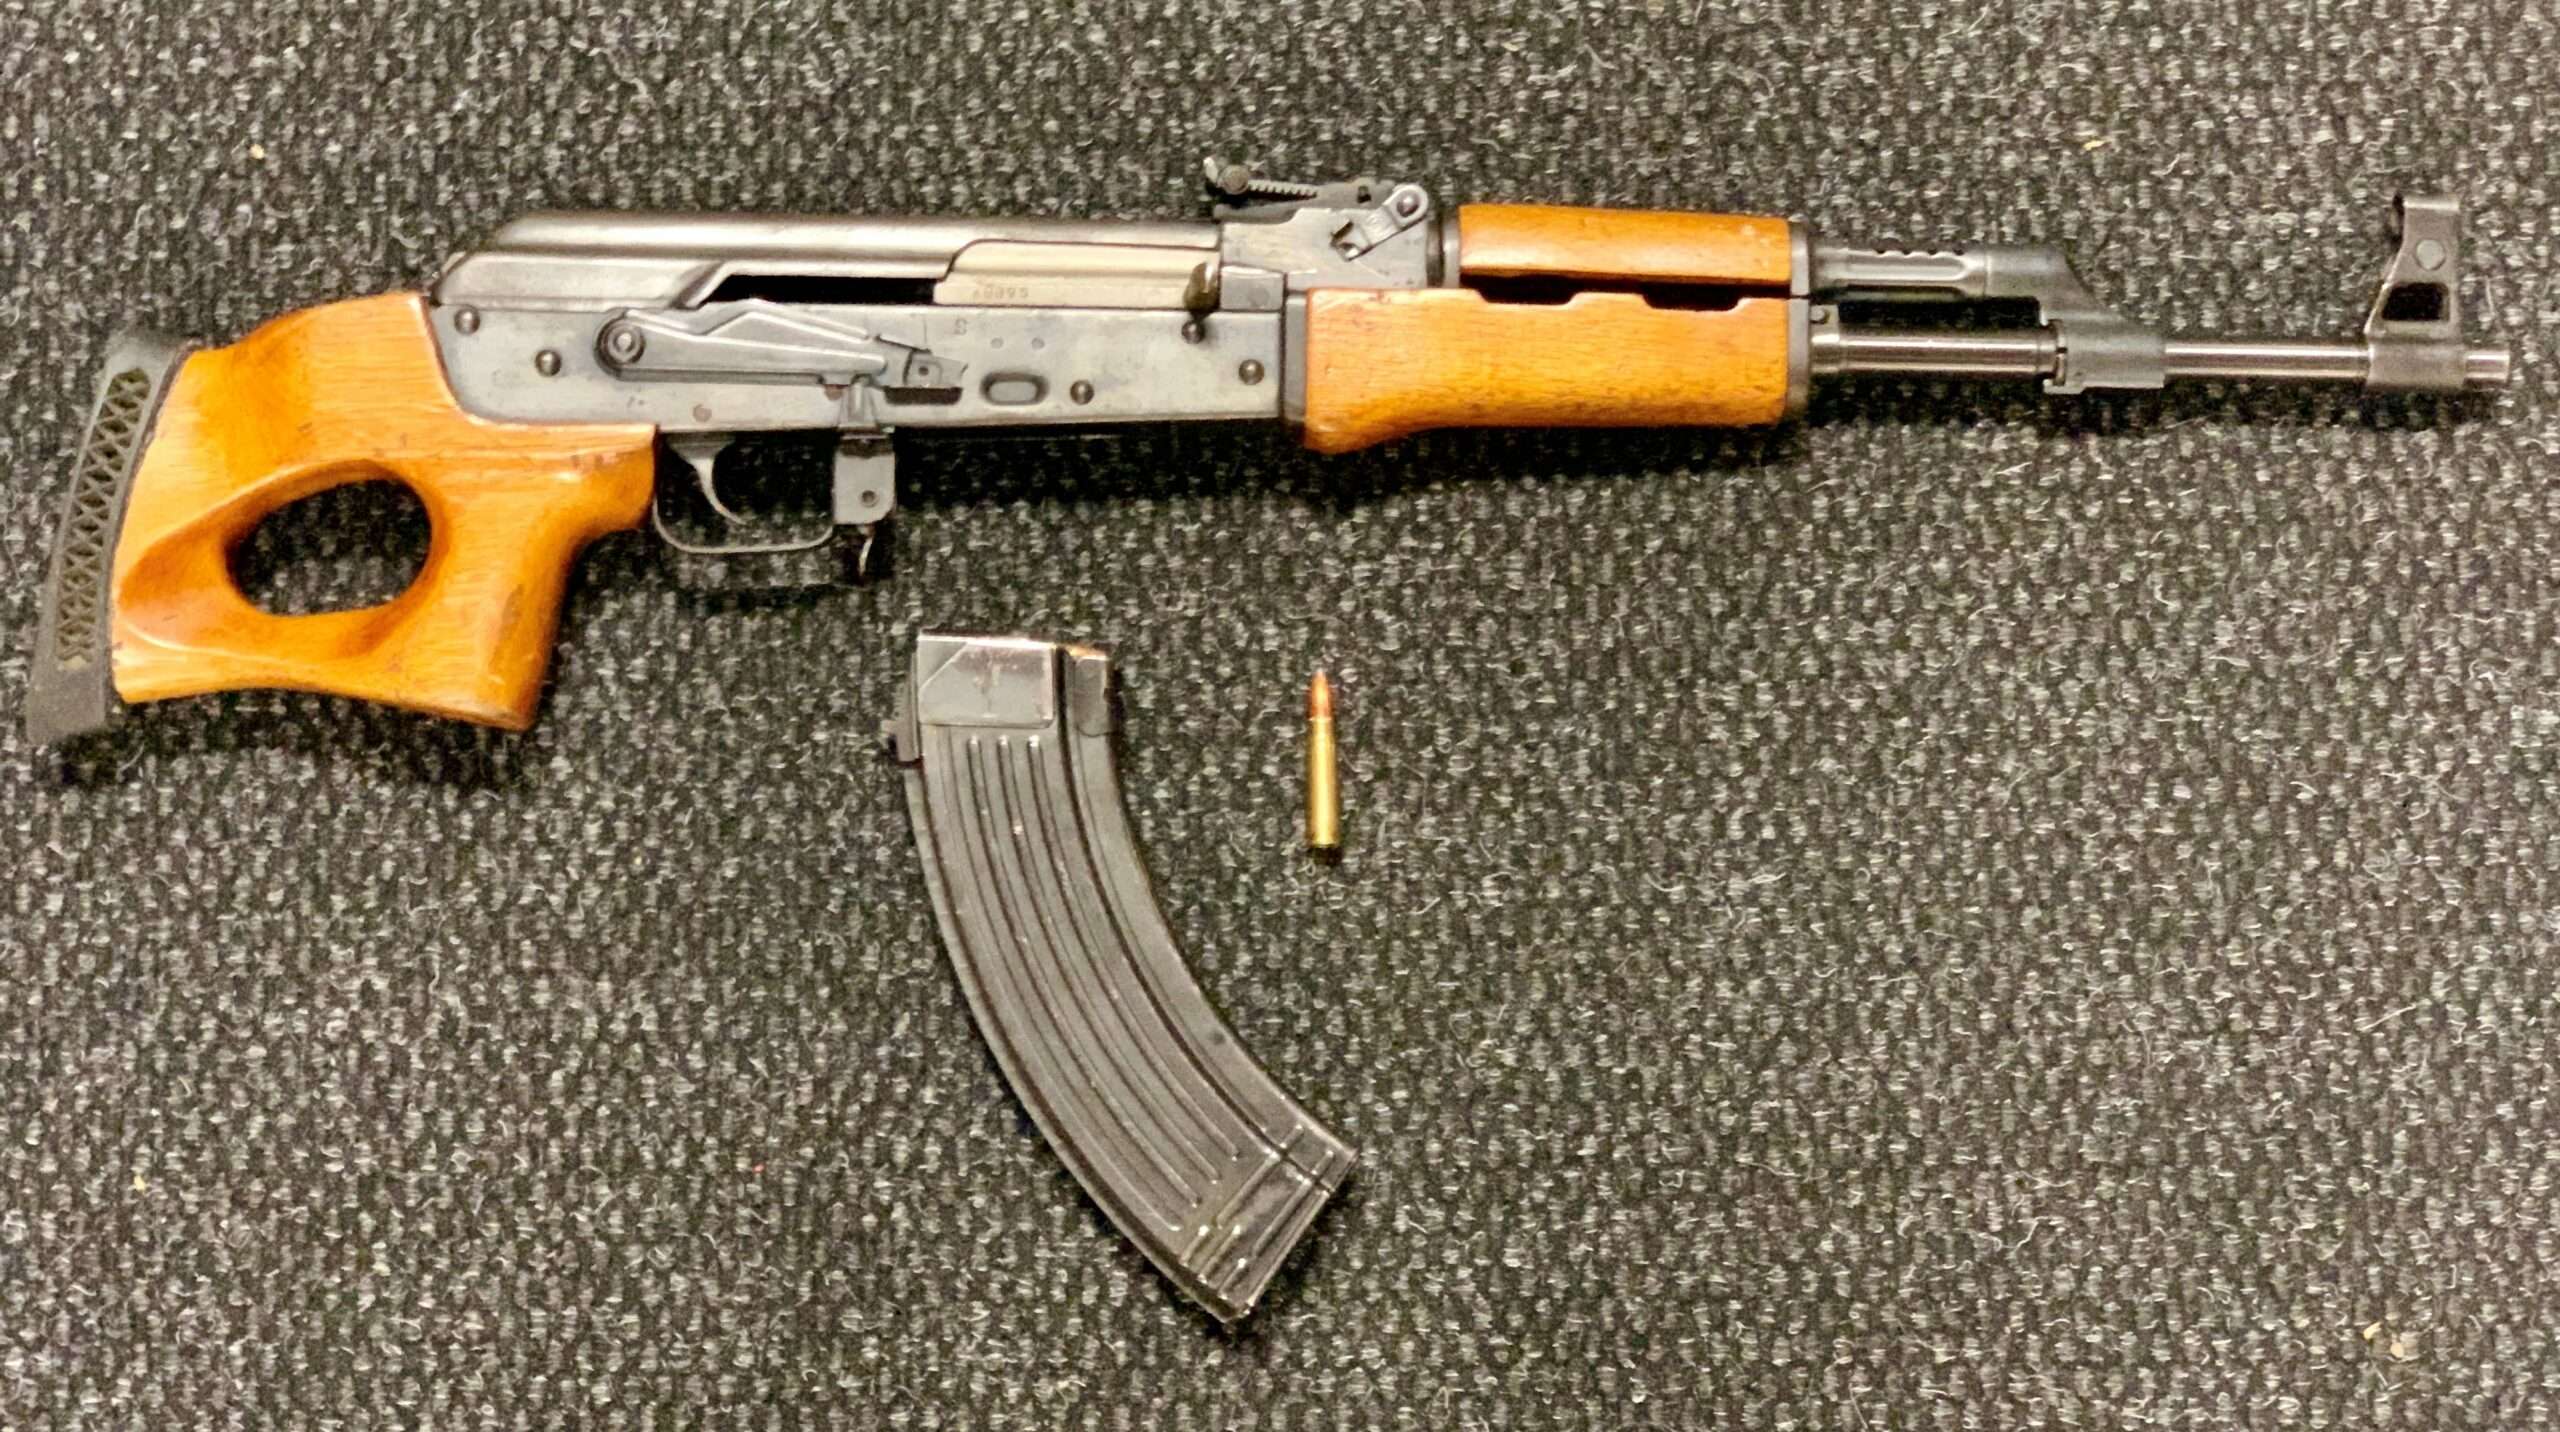 Social media users claim AK-47 "or similar" used in Thursday Trent Blvd shooting